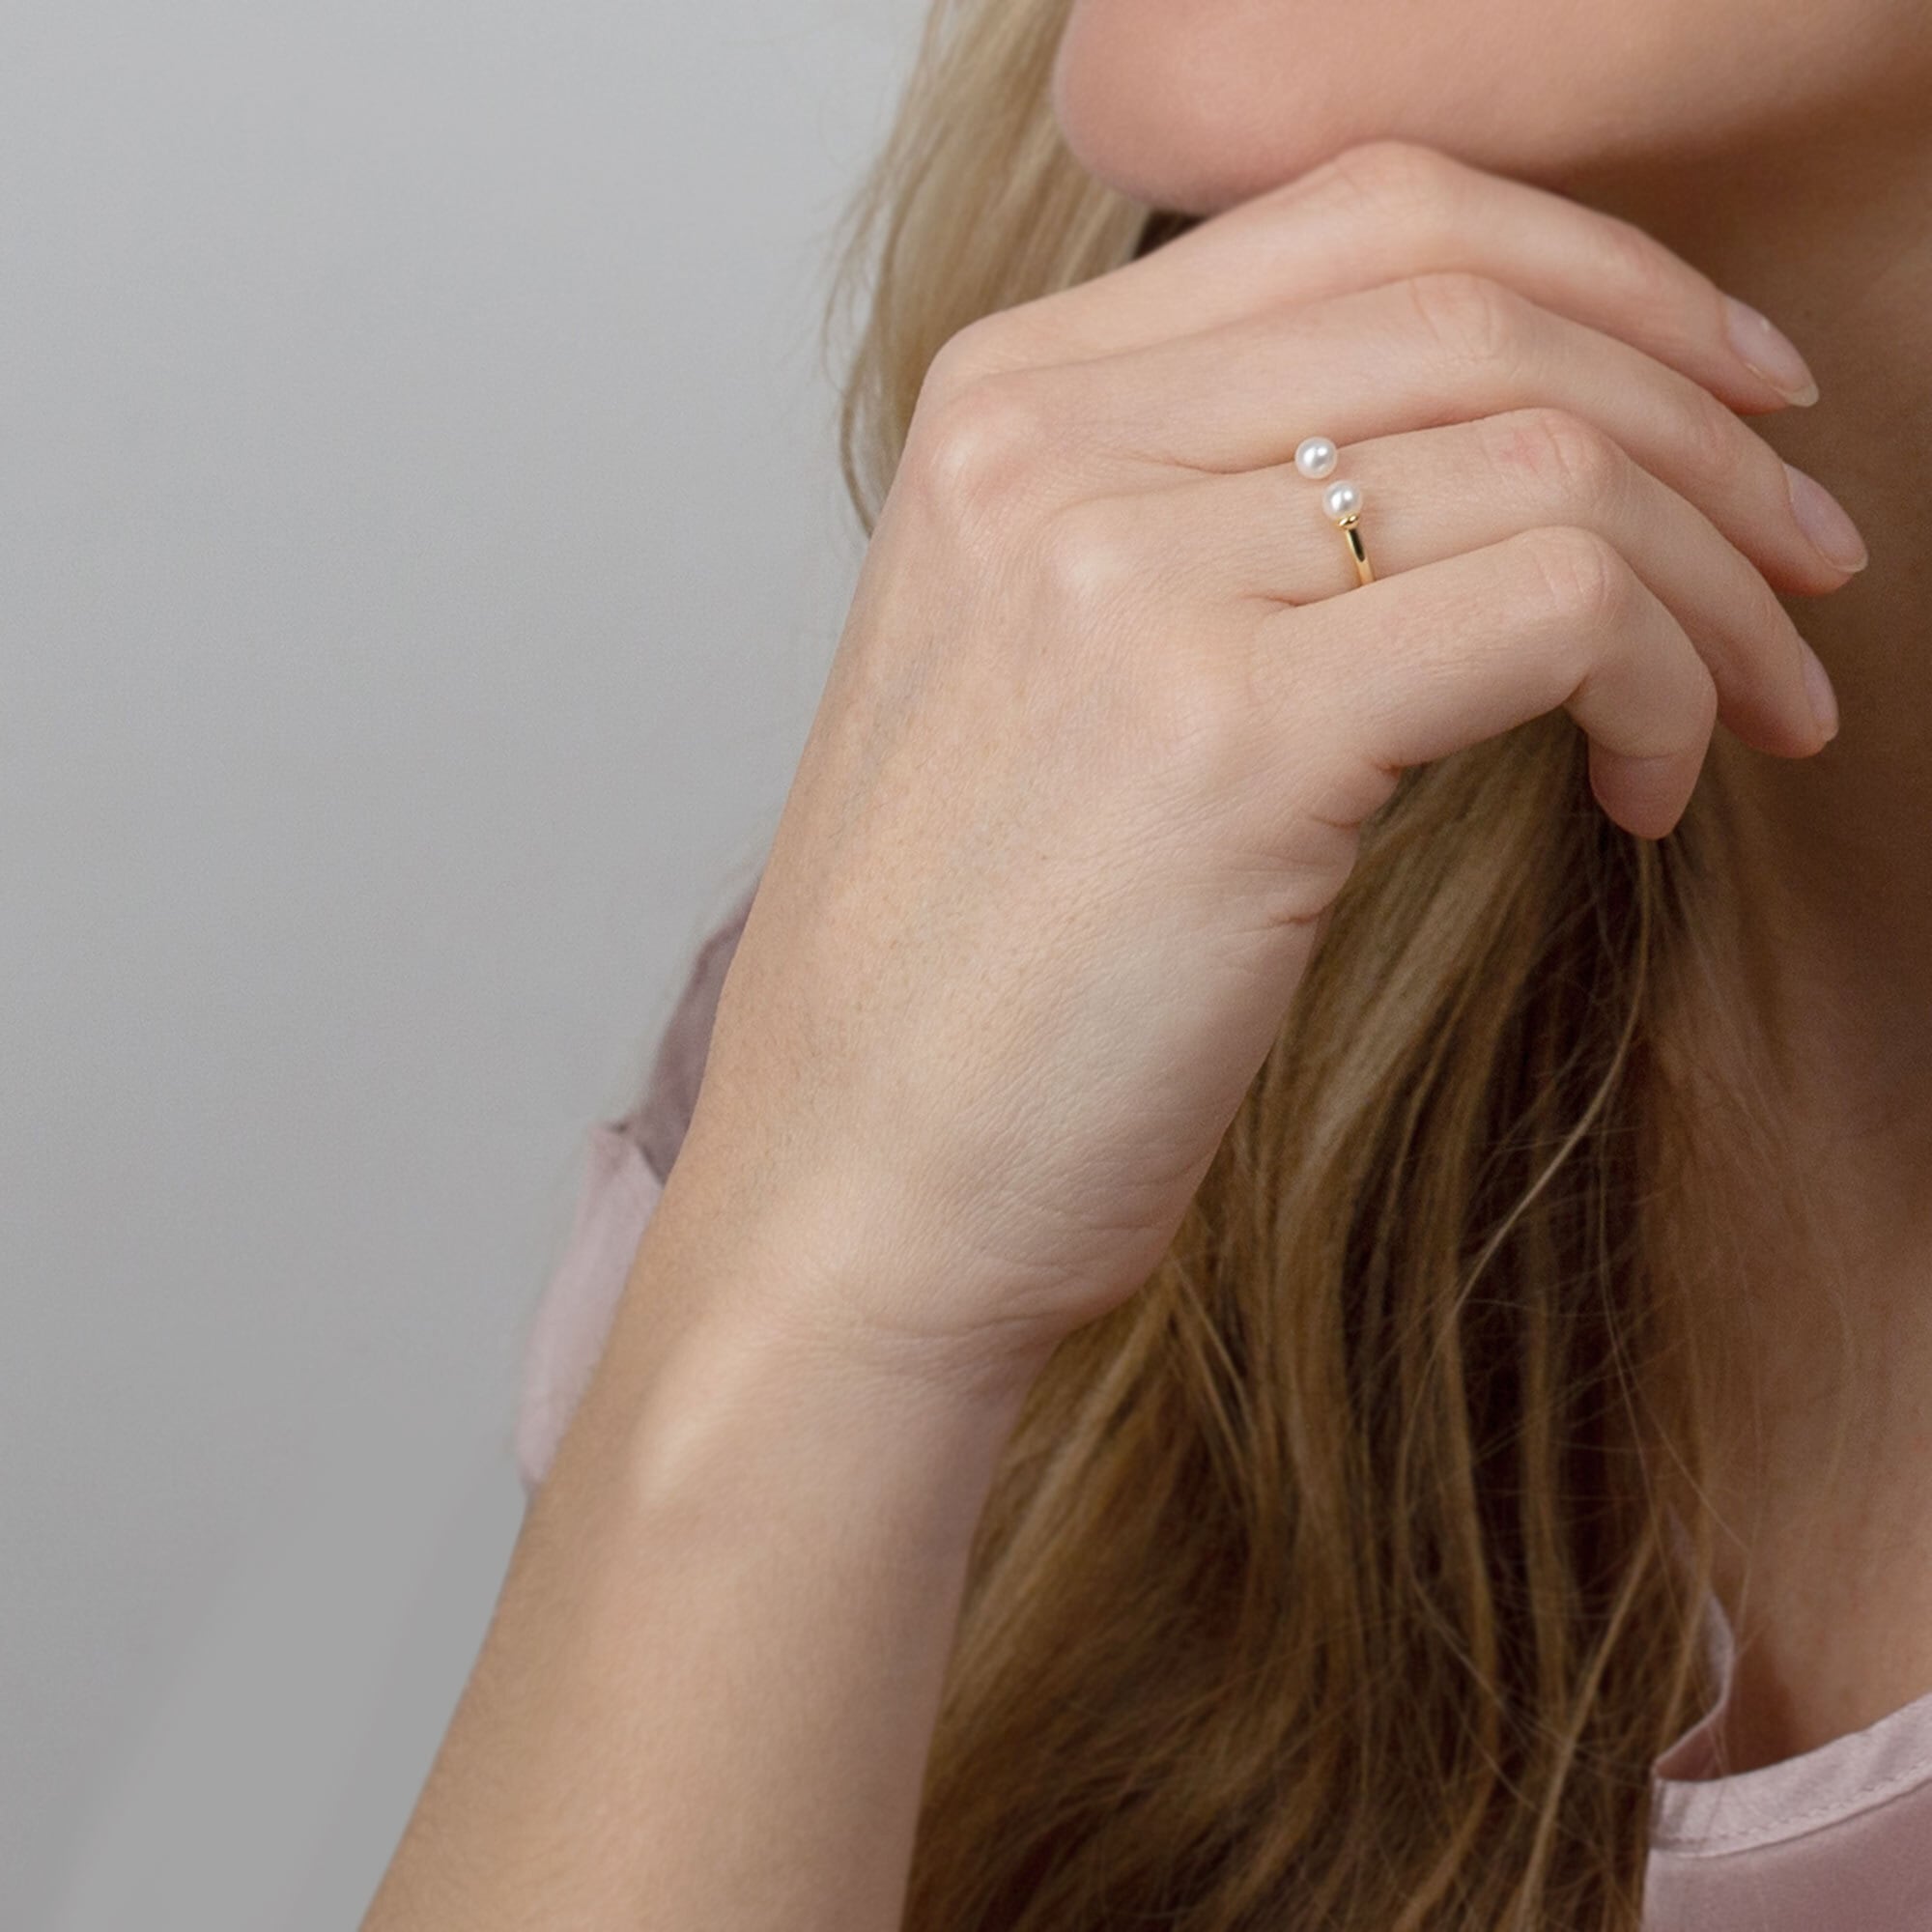 AILORIA Fingerring »Ring gold/weiße Perle SACHIKO«